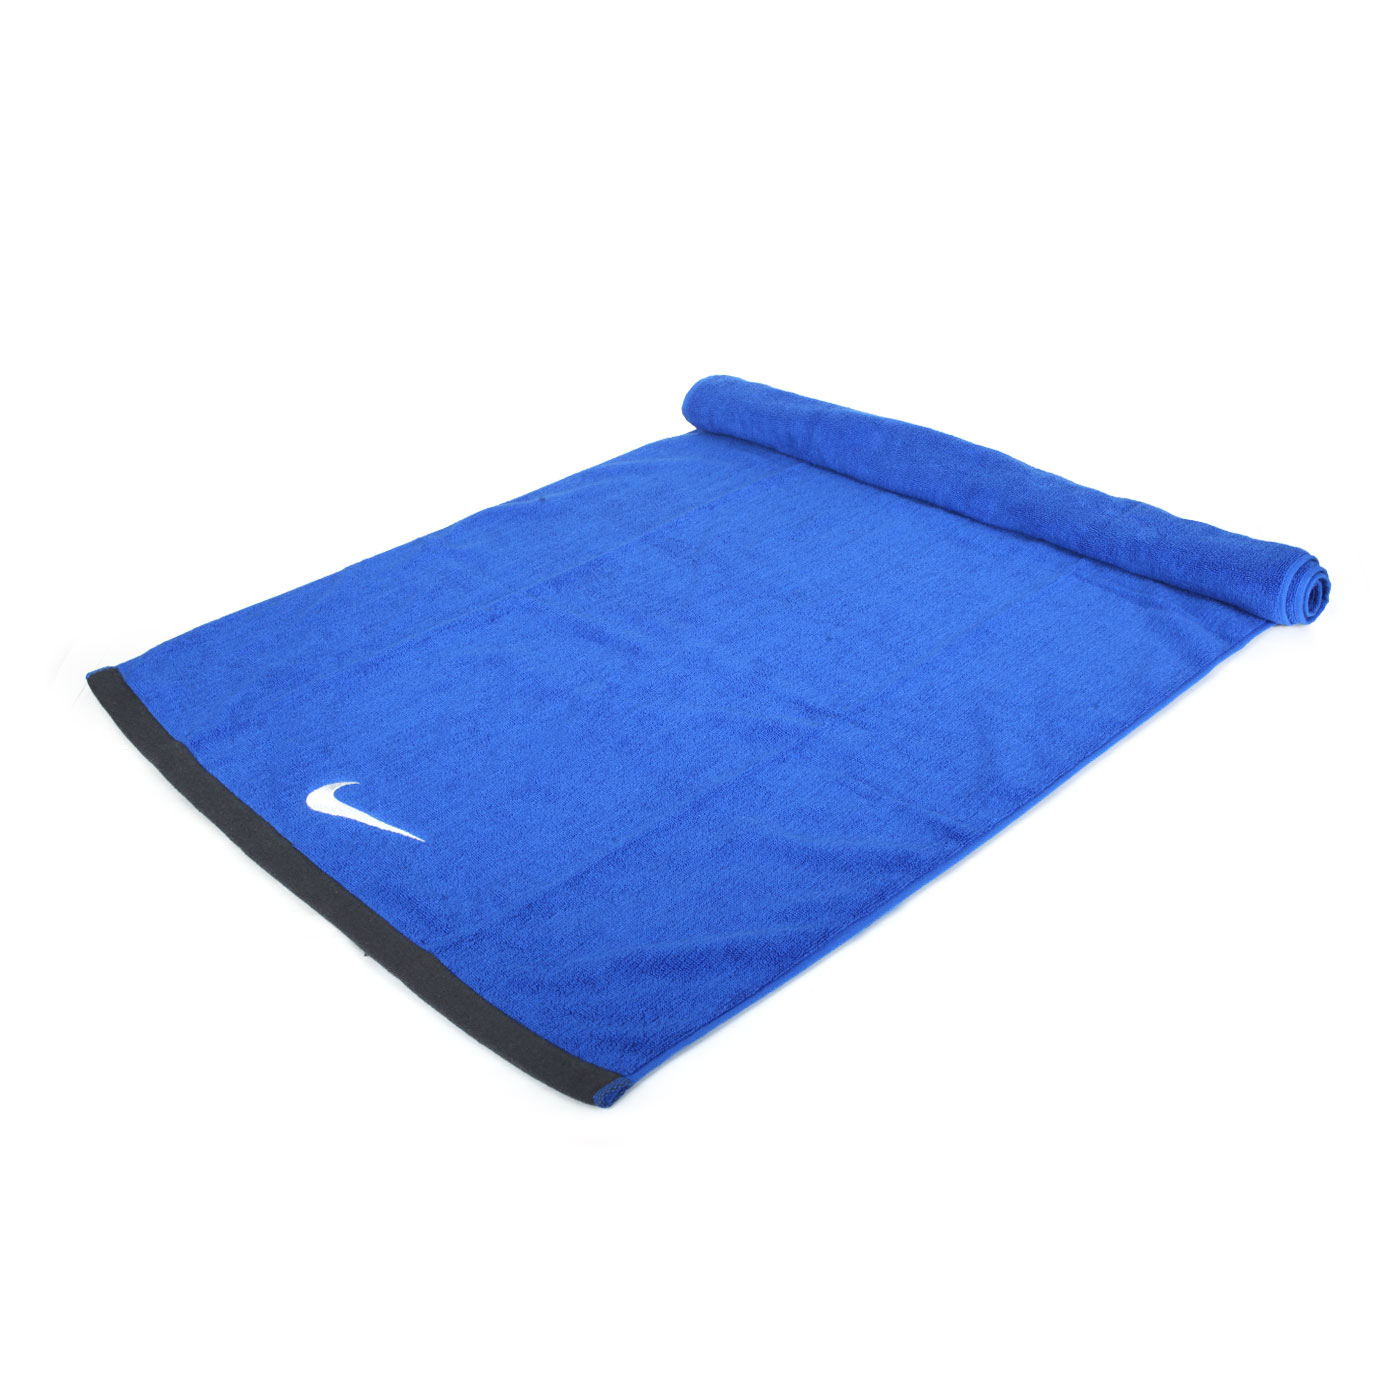 NIKE 運動大浴巾(60*120cm) N1001522010LG - 藍灰白